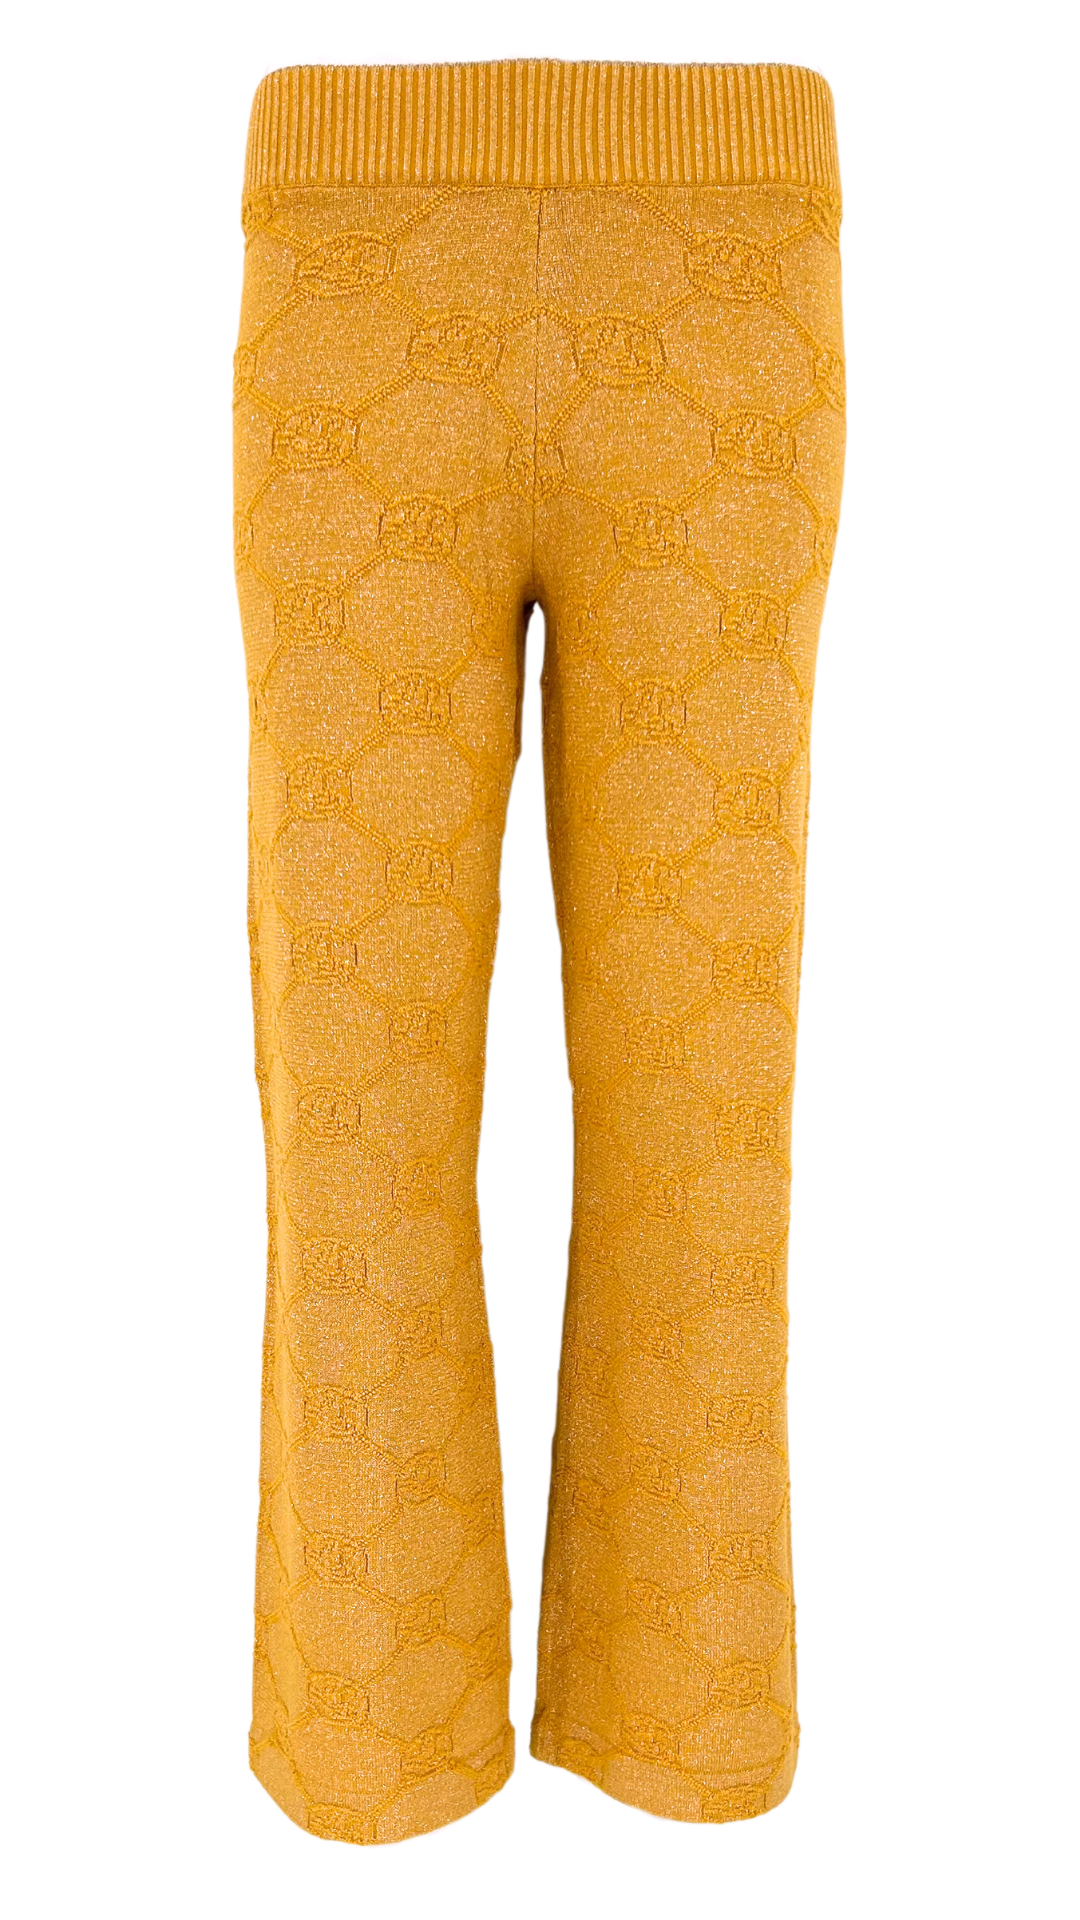 a gold yellow knitwear pants with a mono logo pattern on it